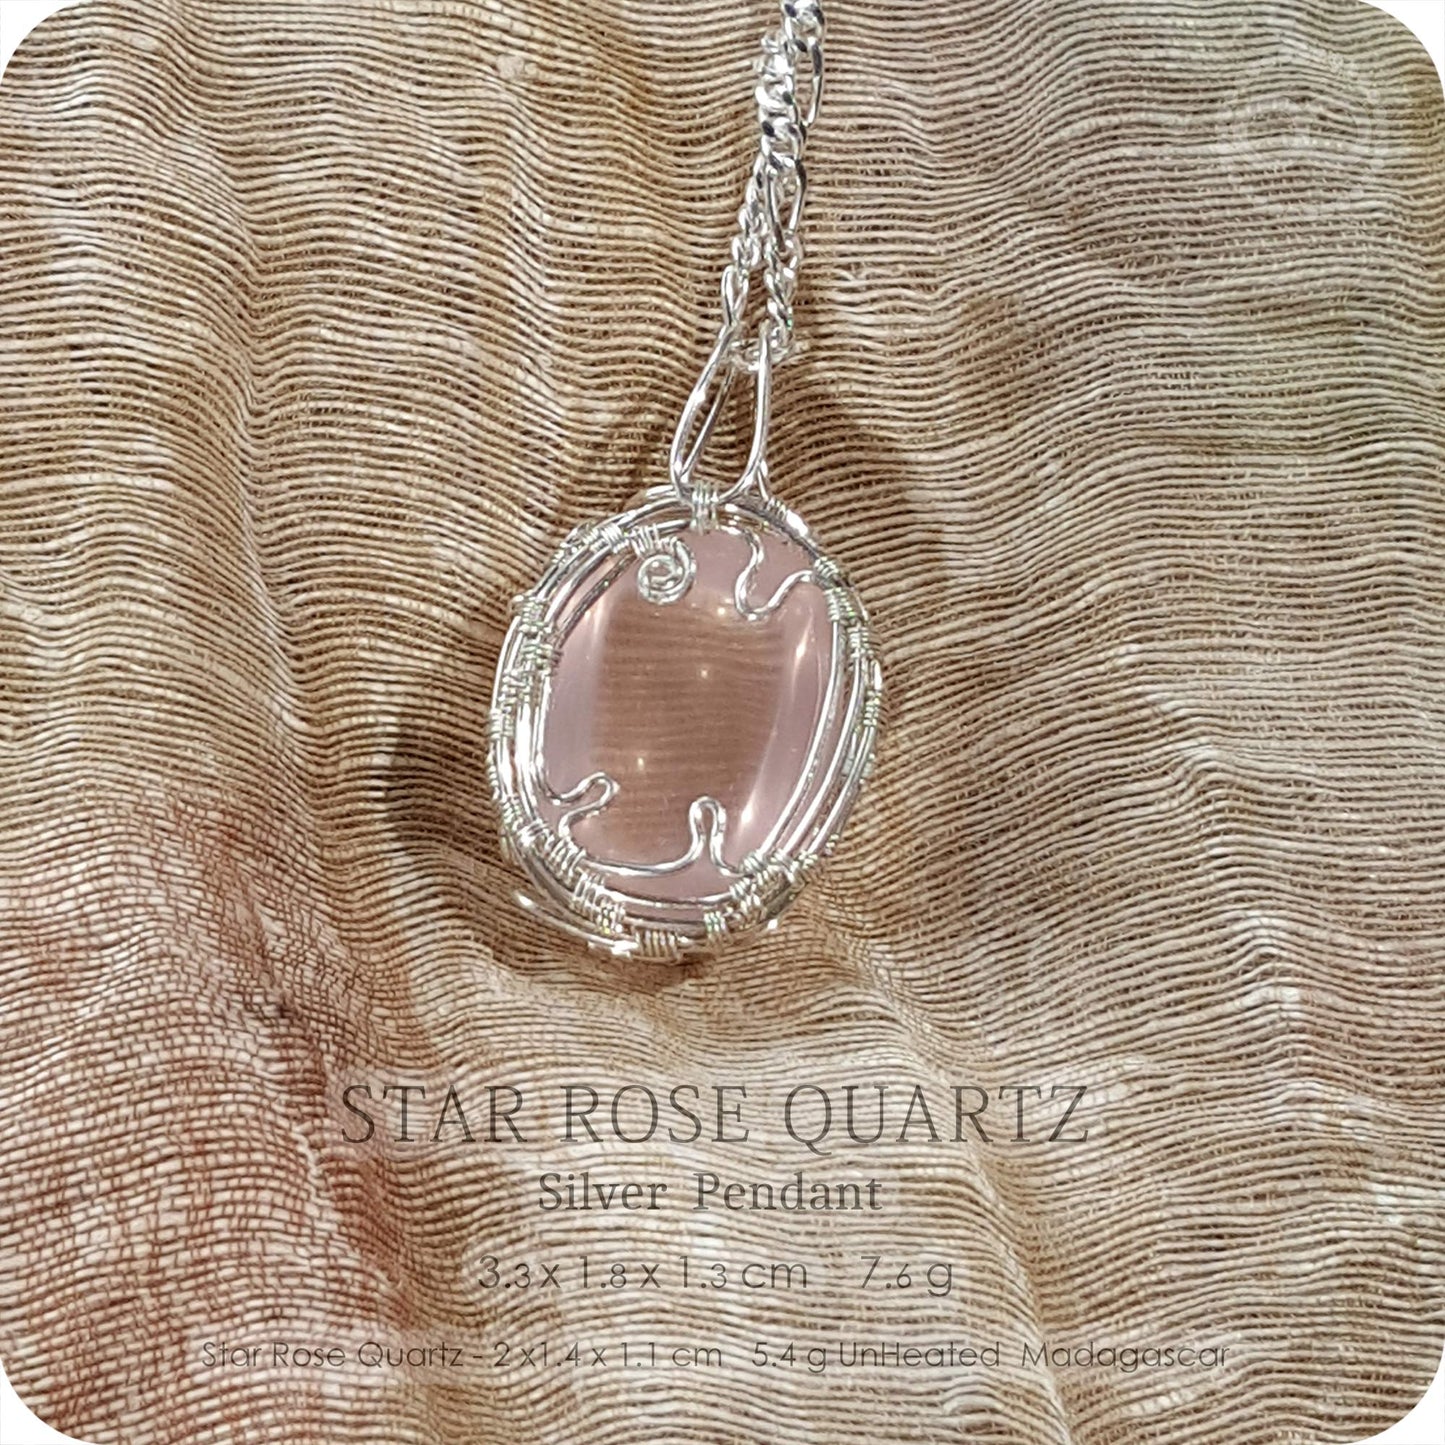 Gem Star Rose Quartz 微星光粉晶寶石 Silver Necklace - H219